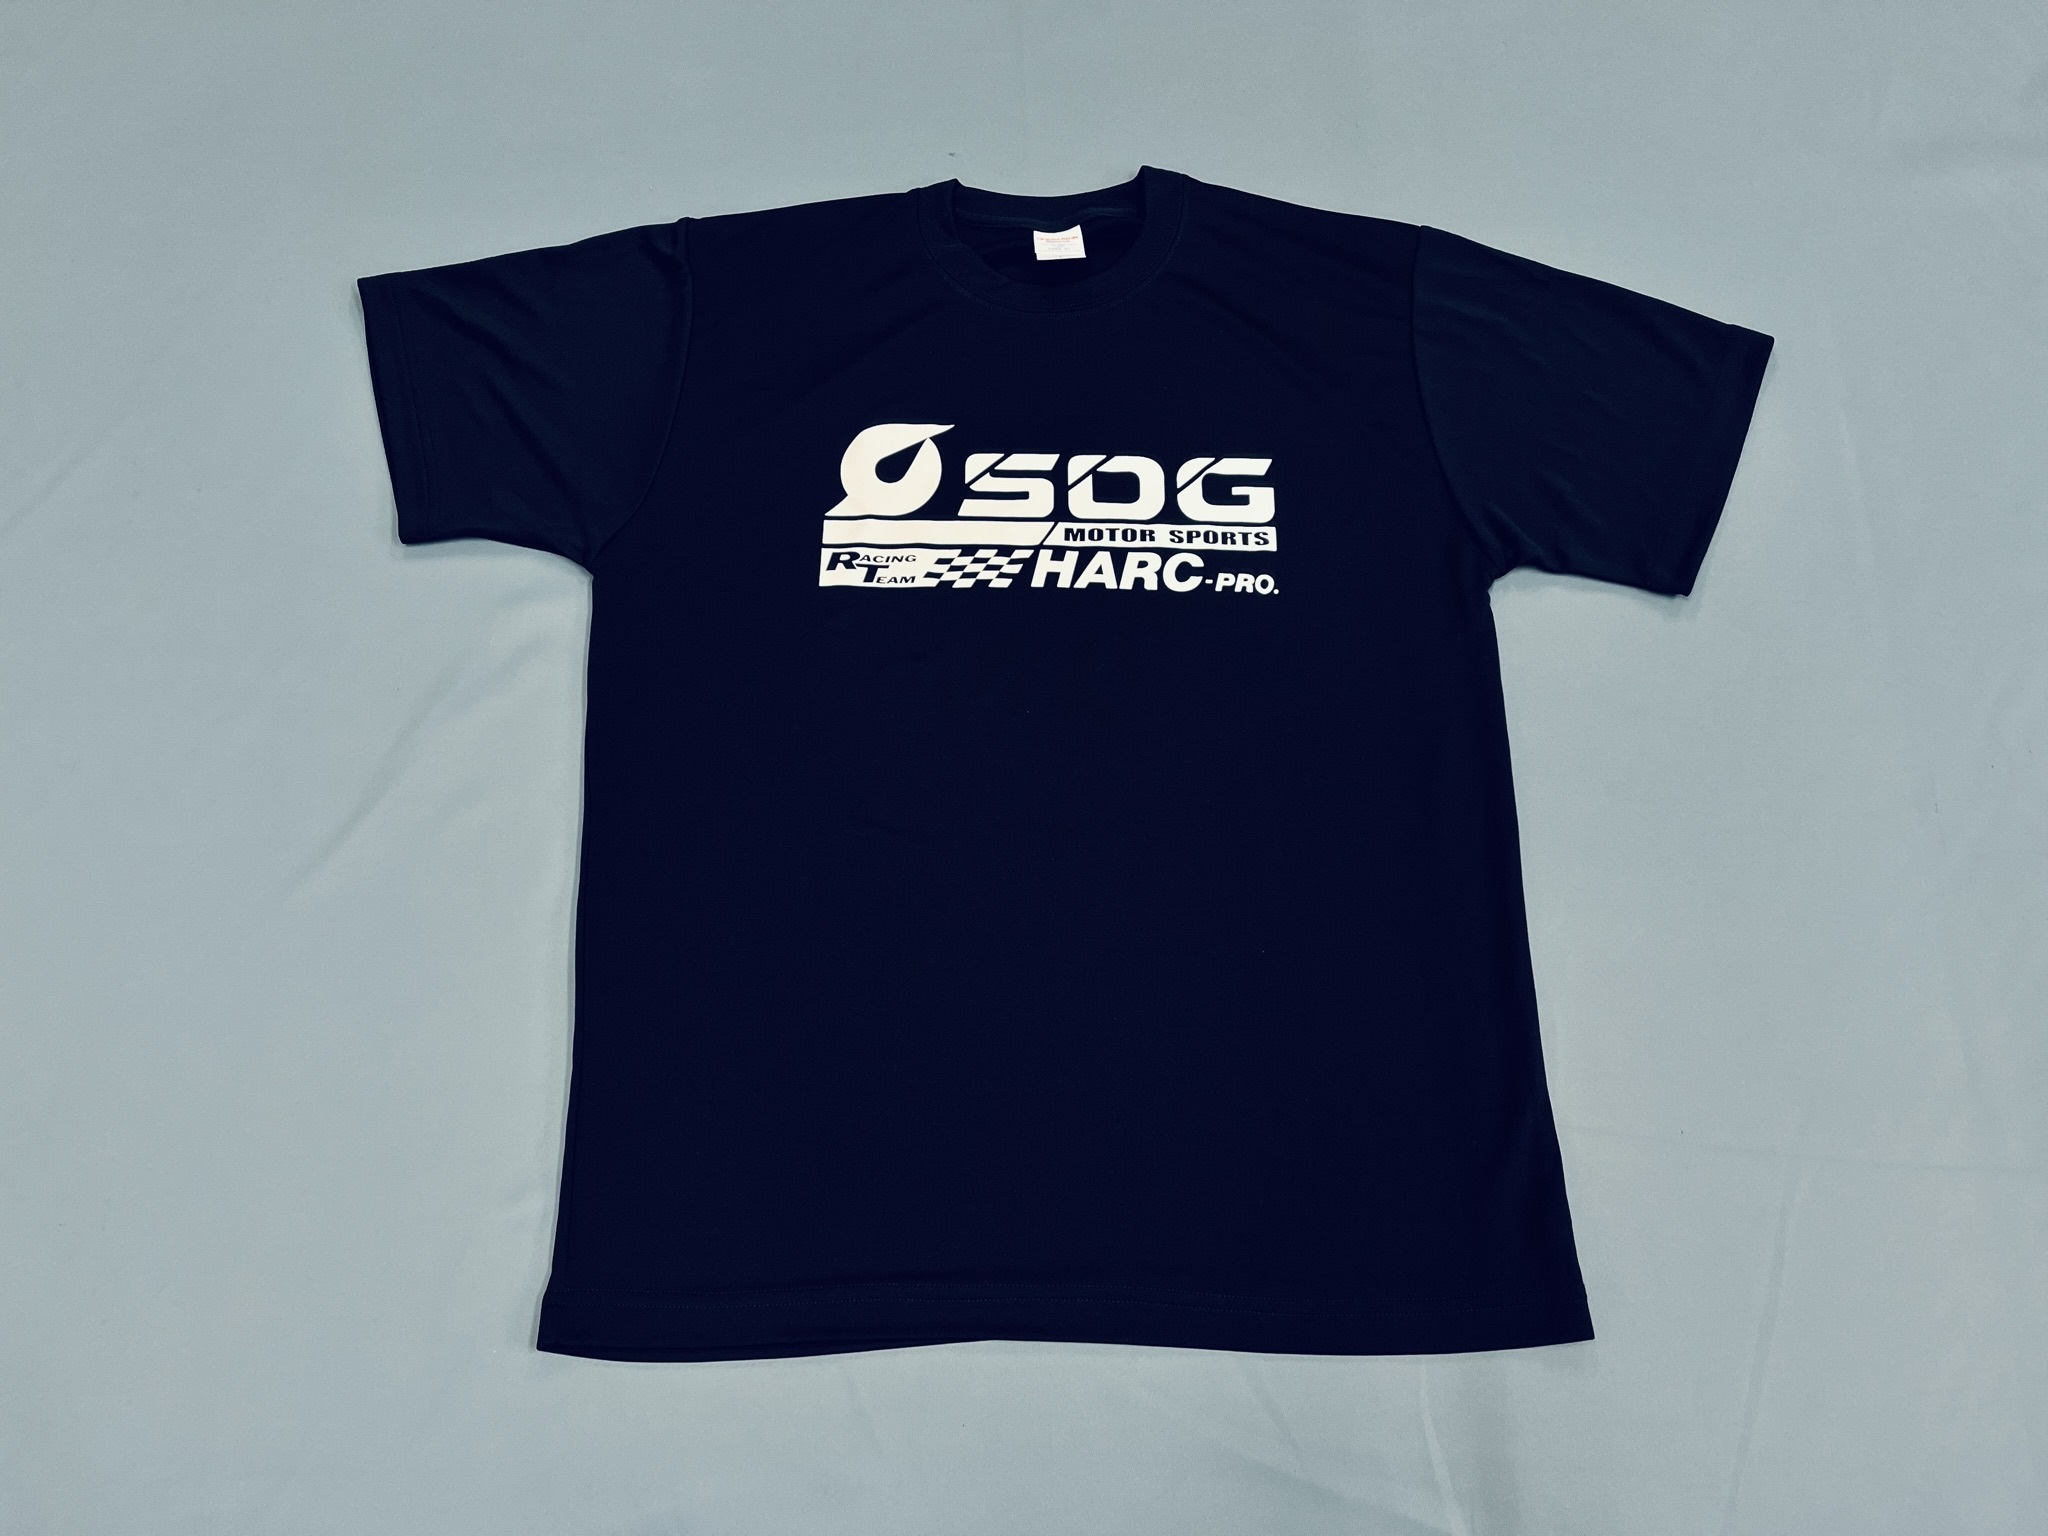 SDG Motor Sports RT HARC-PRO  DRY T-shirt  (navy)